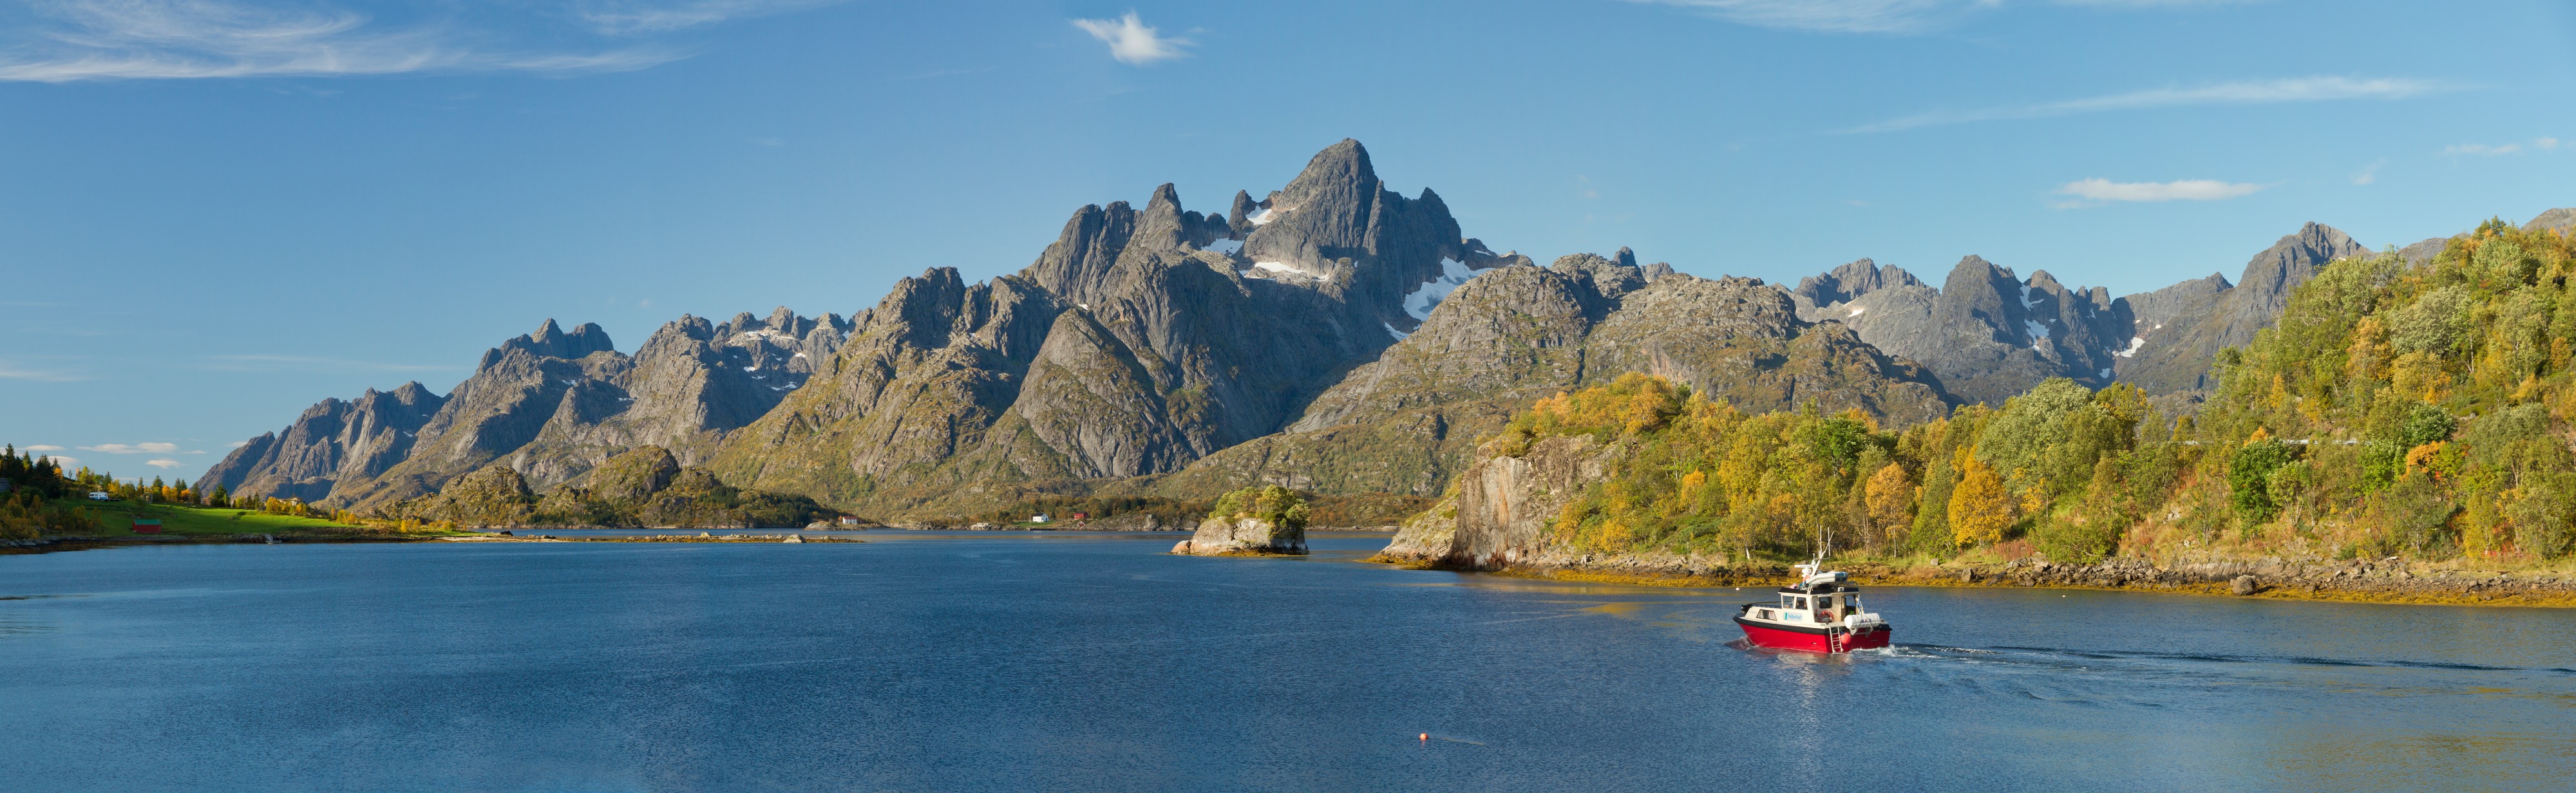 From Tennfjorden towards Raftsundet, Hinnøya, Norway, 2015 September - 4